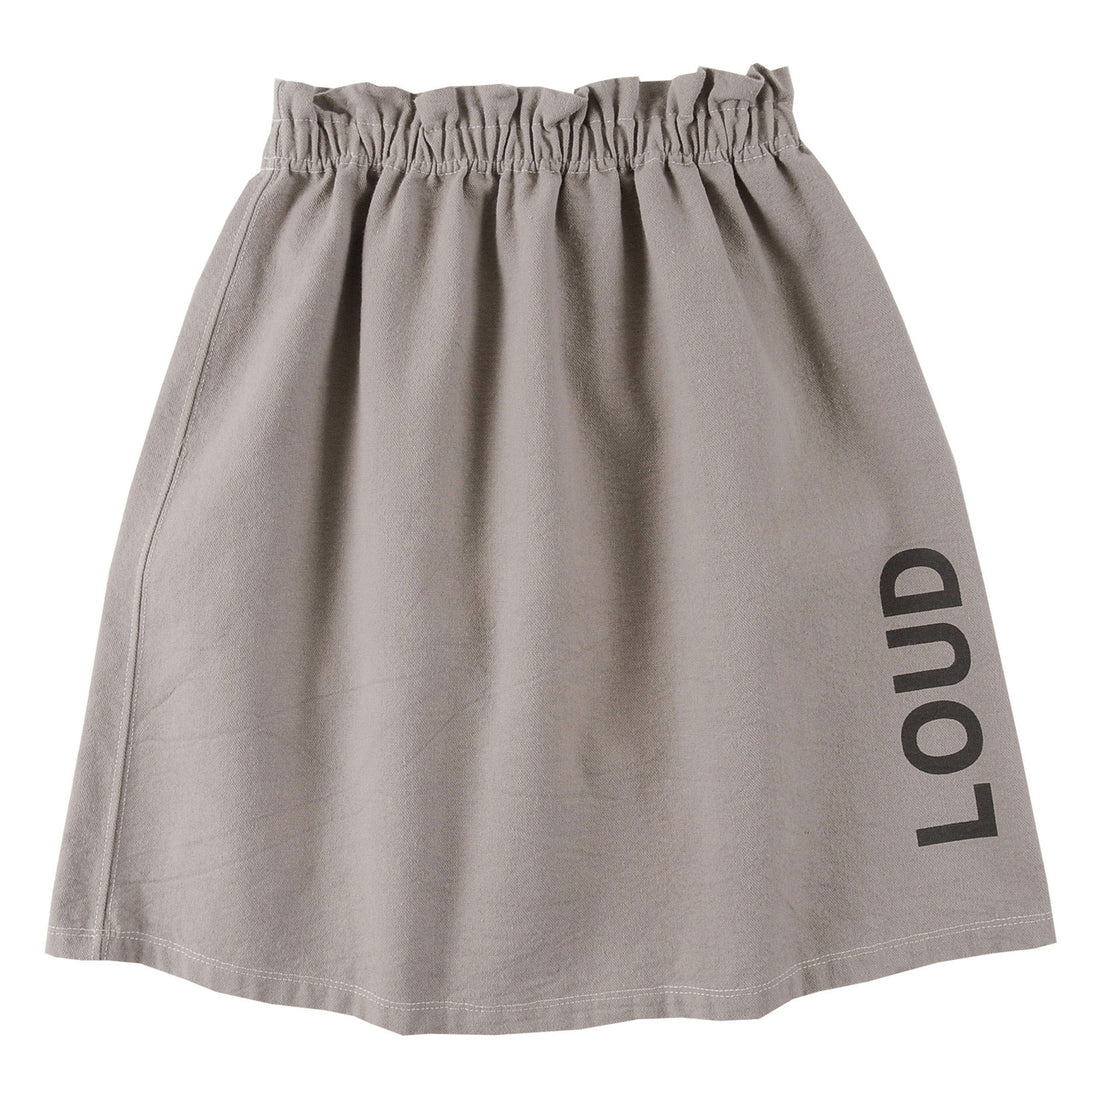 Loud Zinc Reboot  Knee-Length Skirt